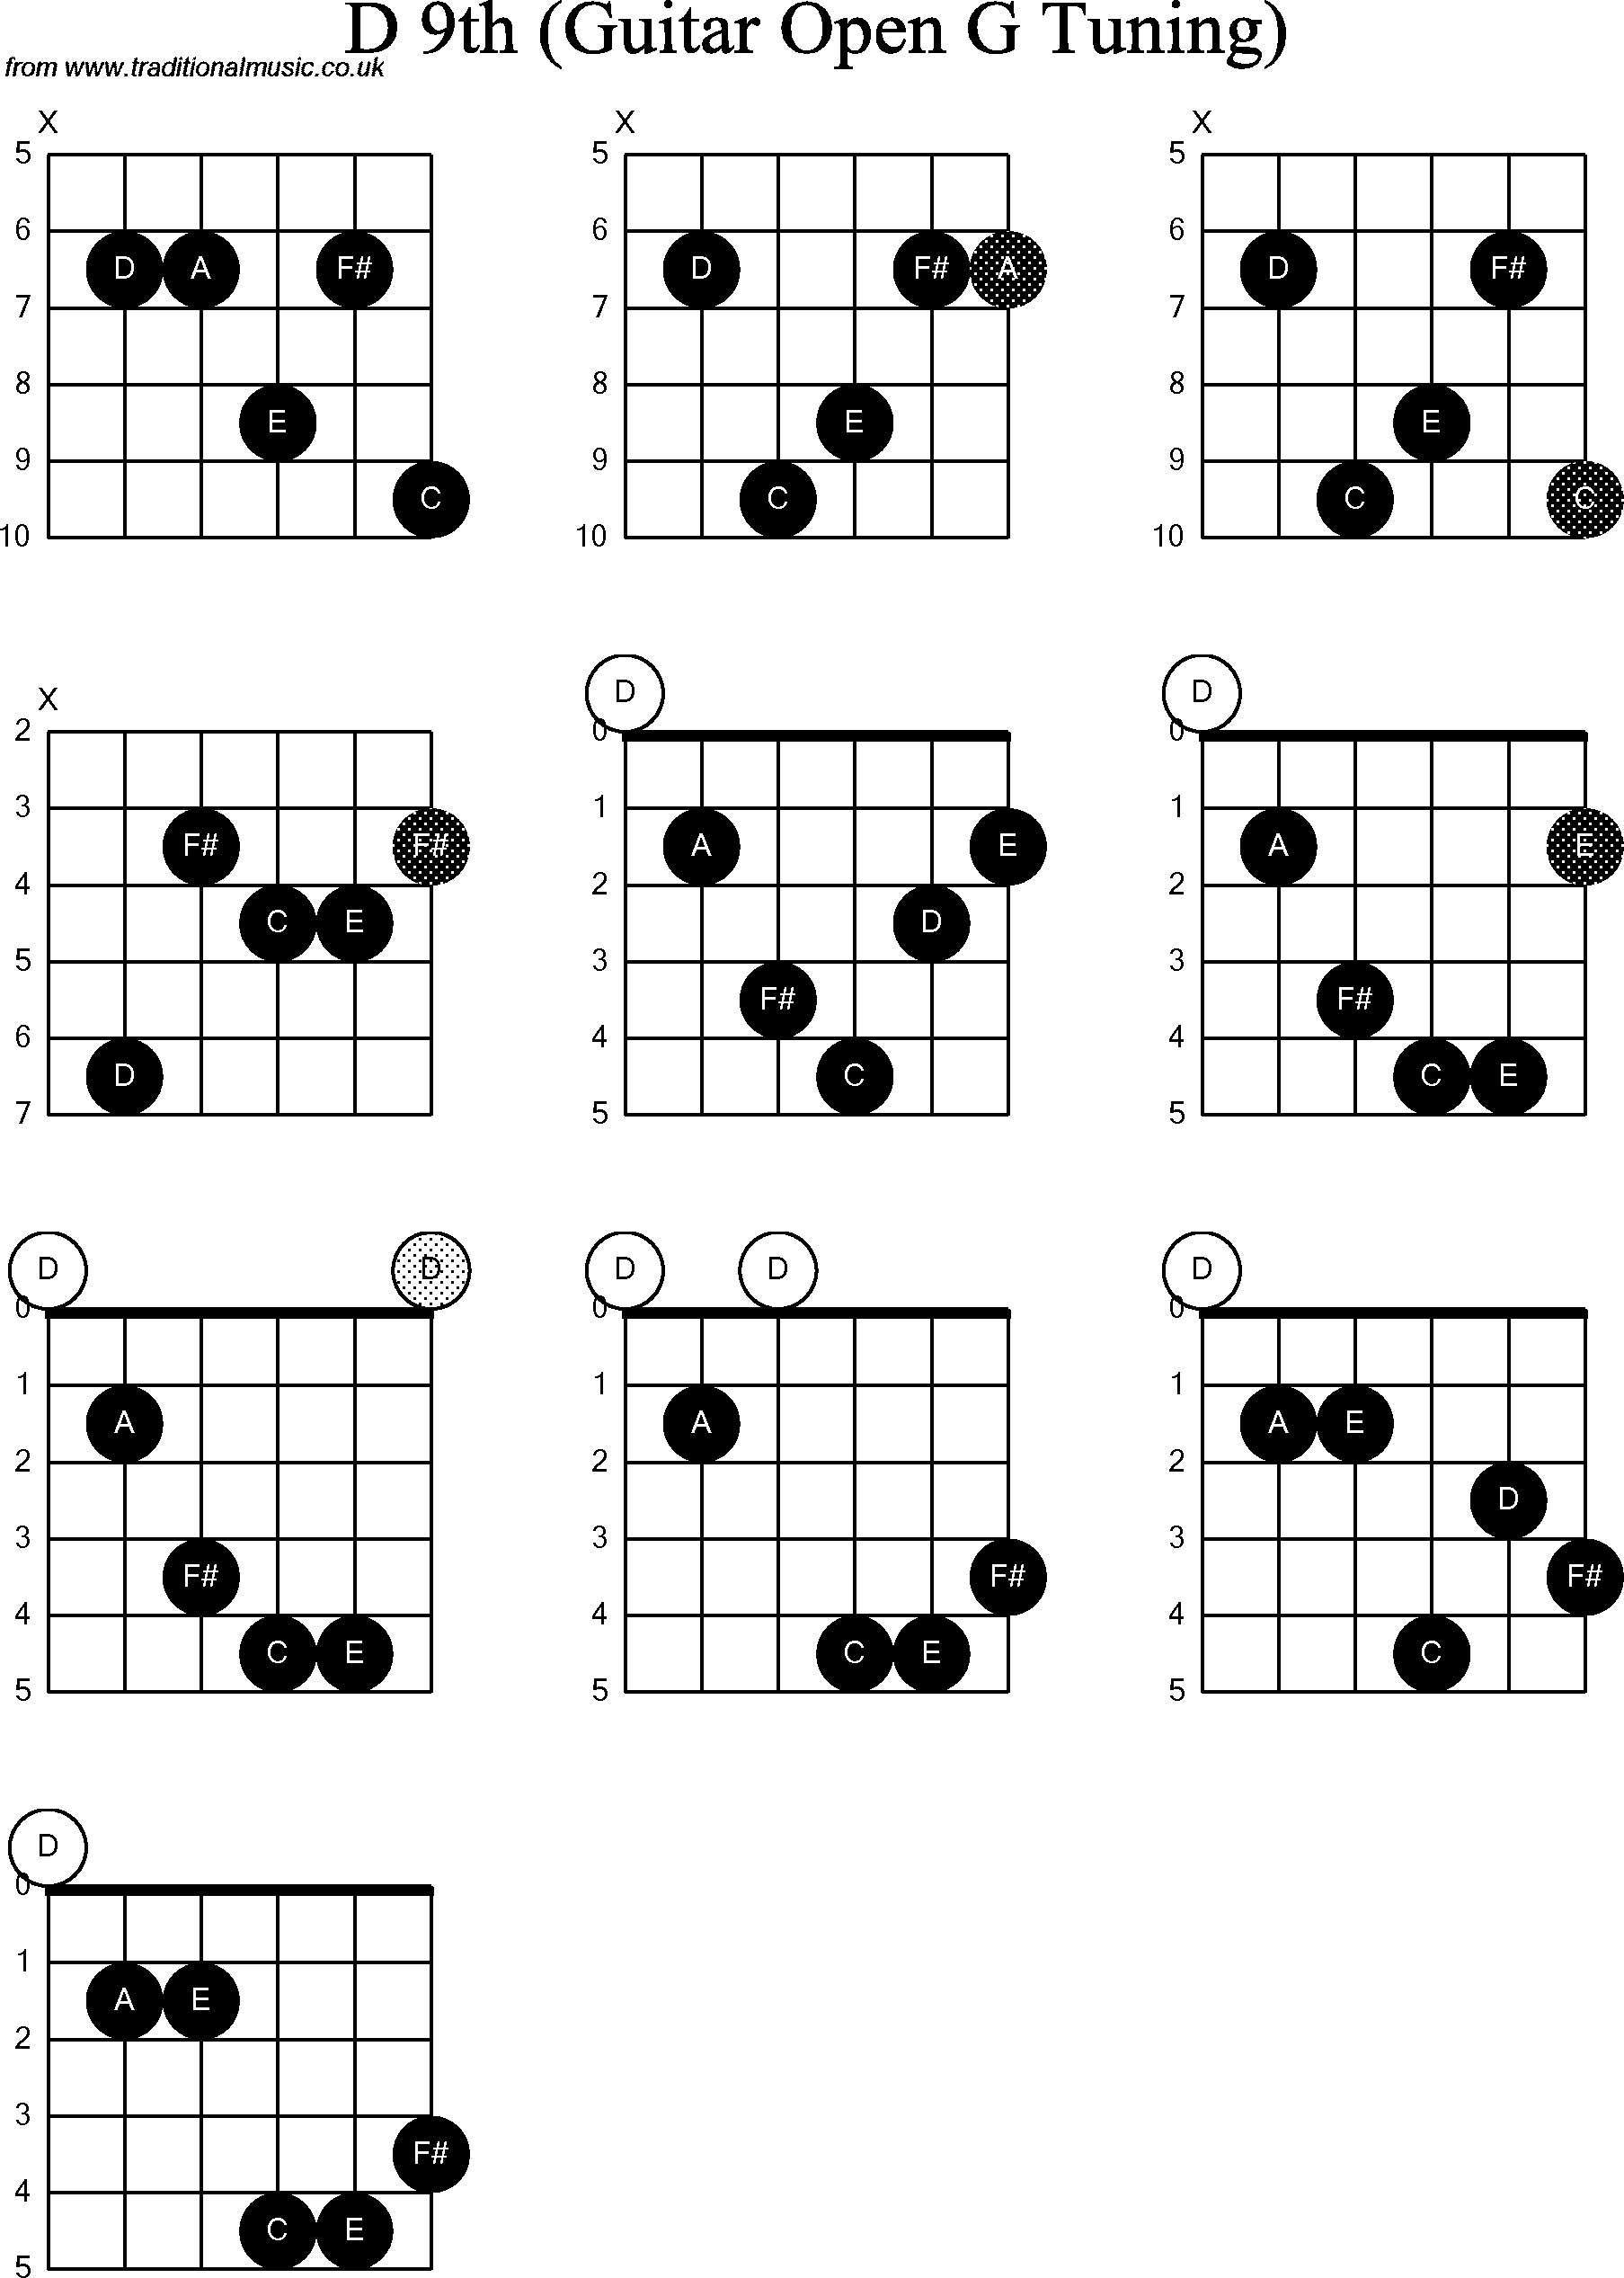 Chord diagrams for Dobro D9th